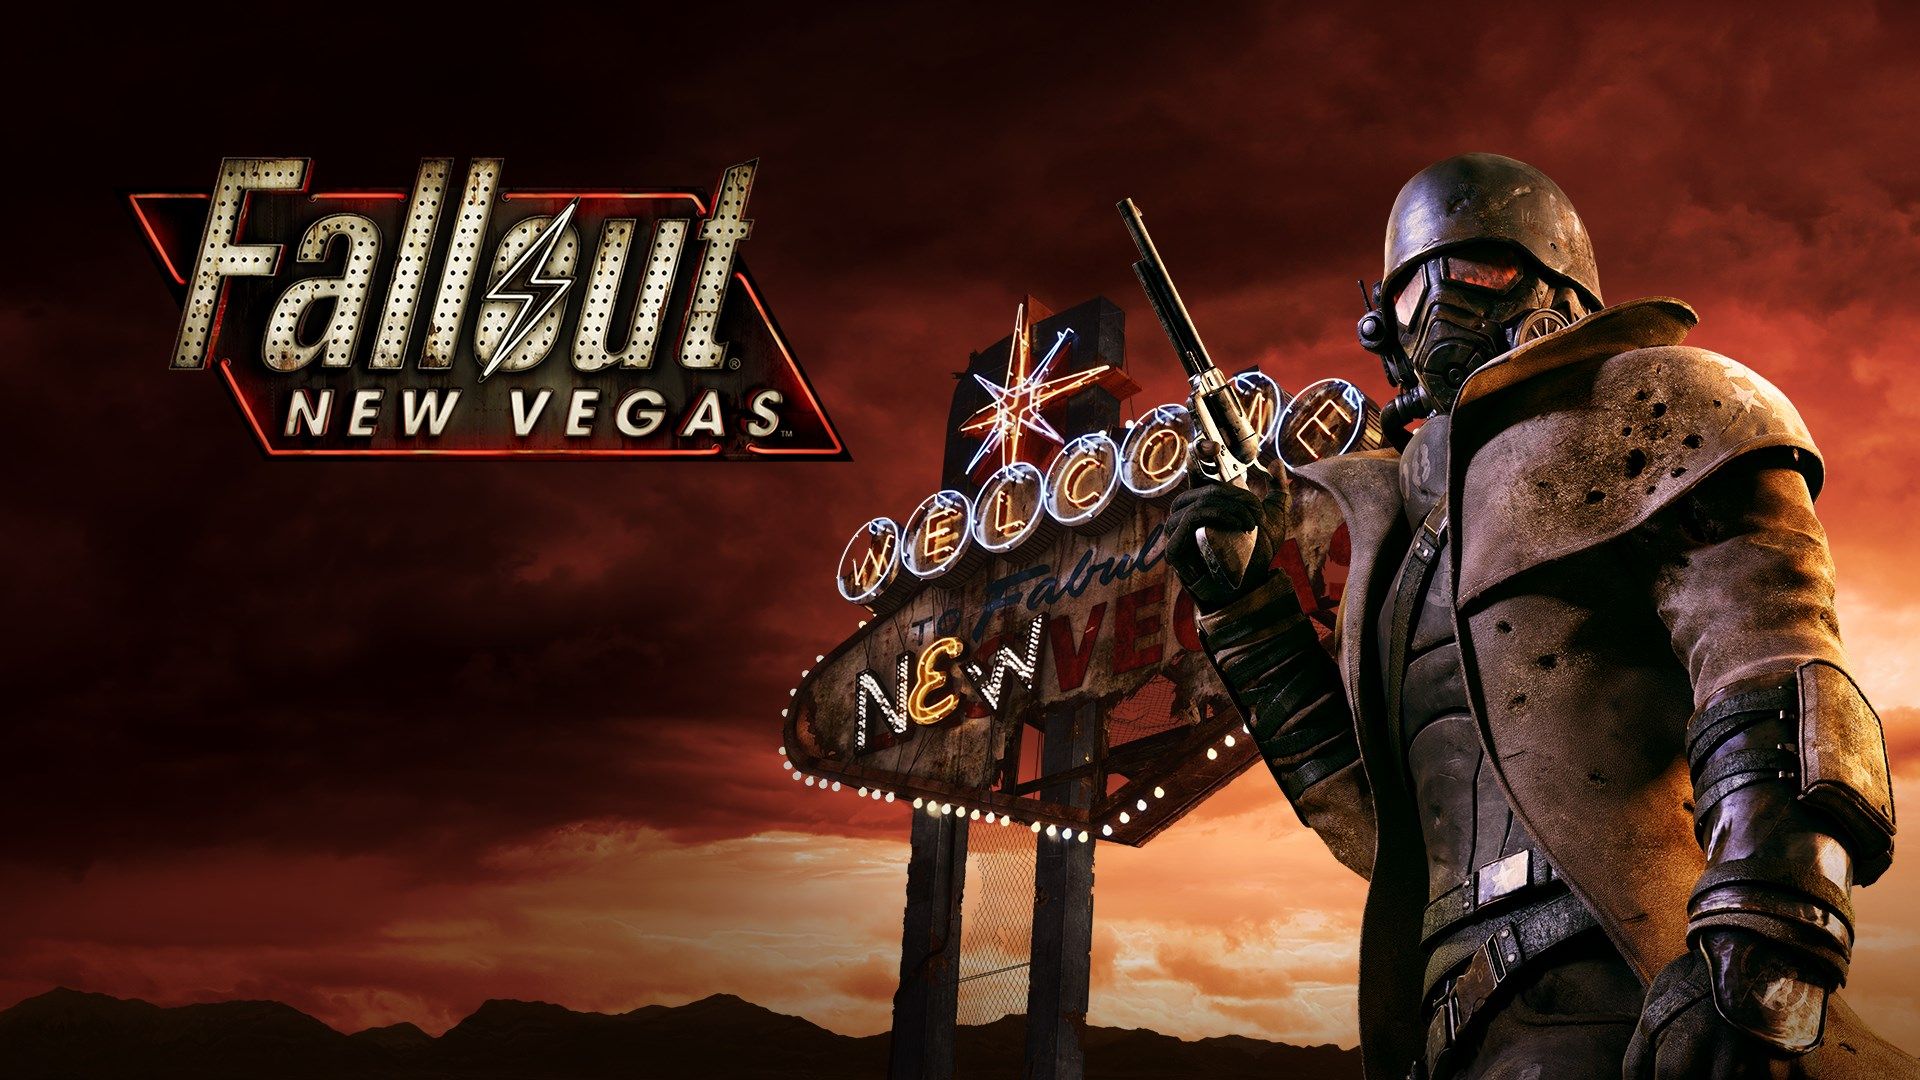 Fallout: New Vegas promo poster